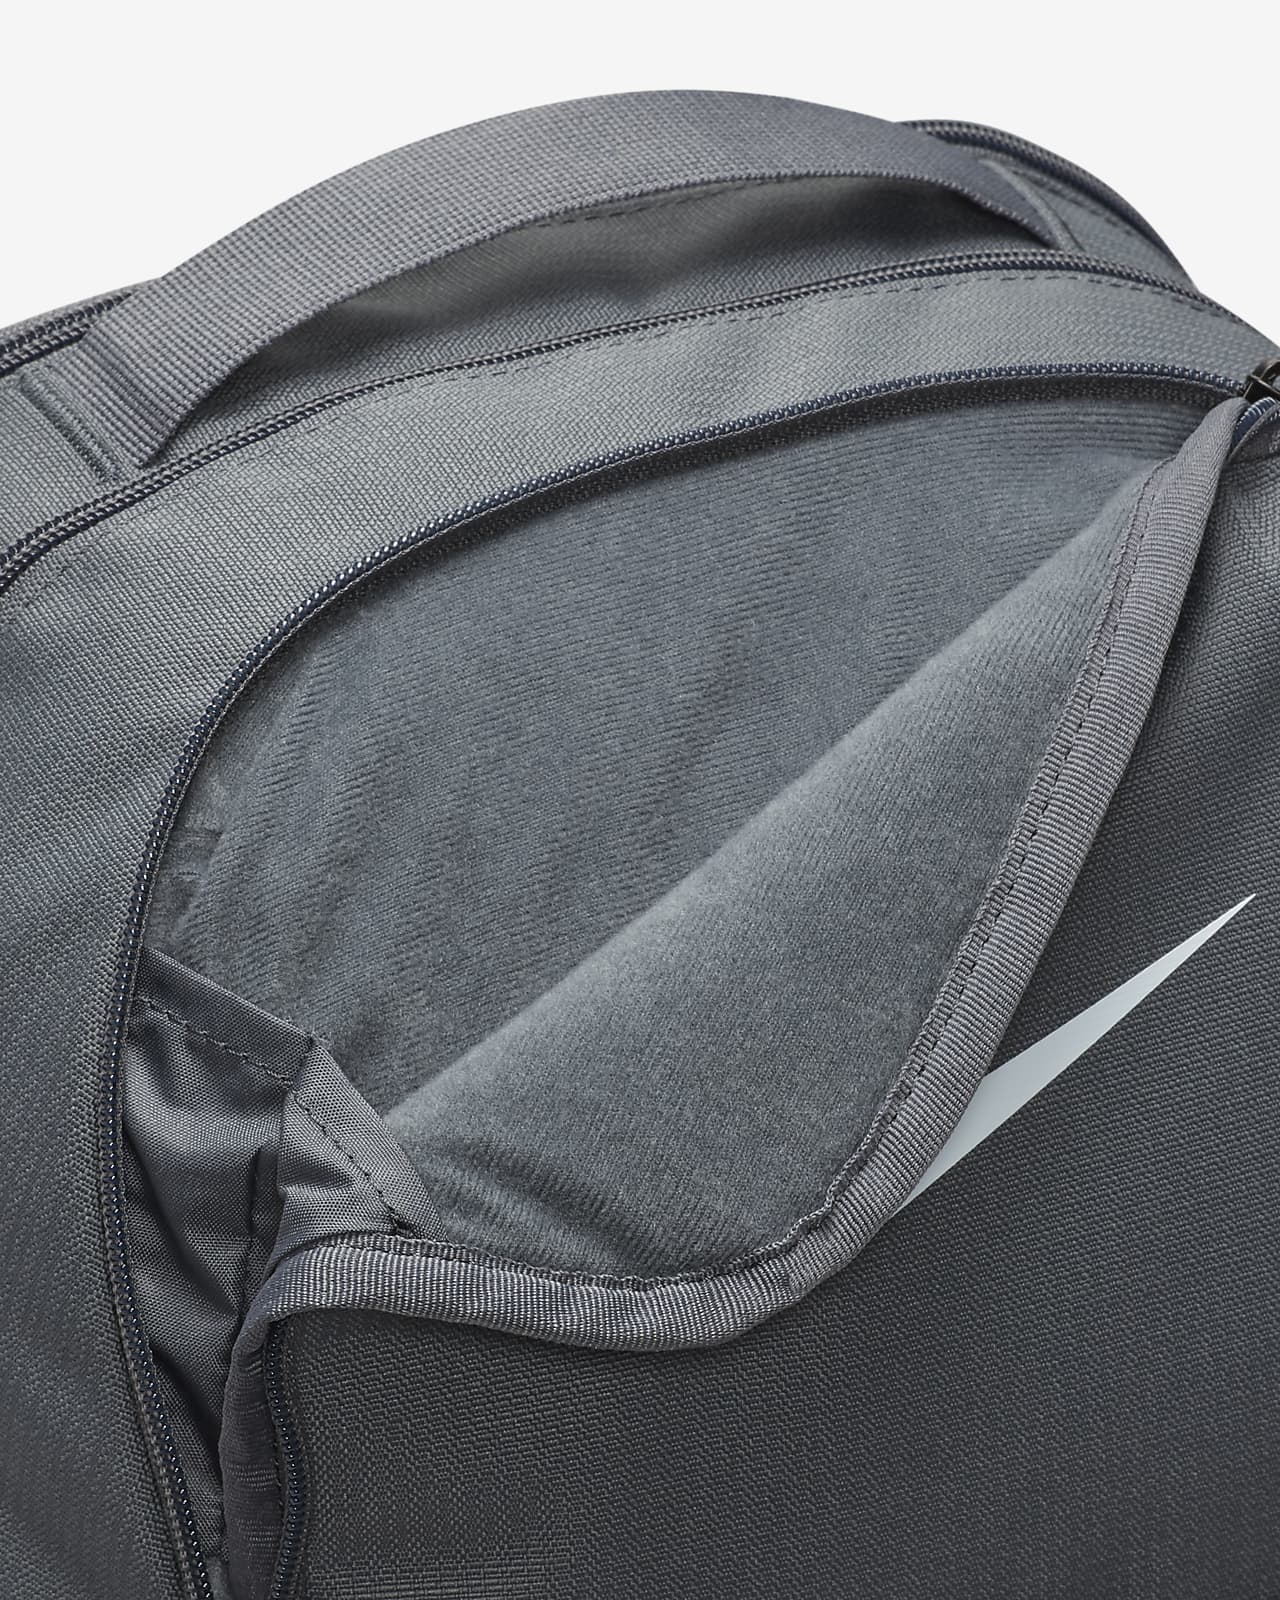 Nike Brasilia 9.5 Xl Backpack, Backpacks, Clothing & Accessories